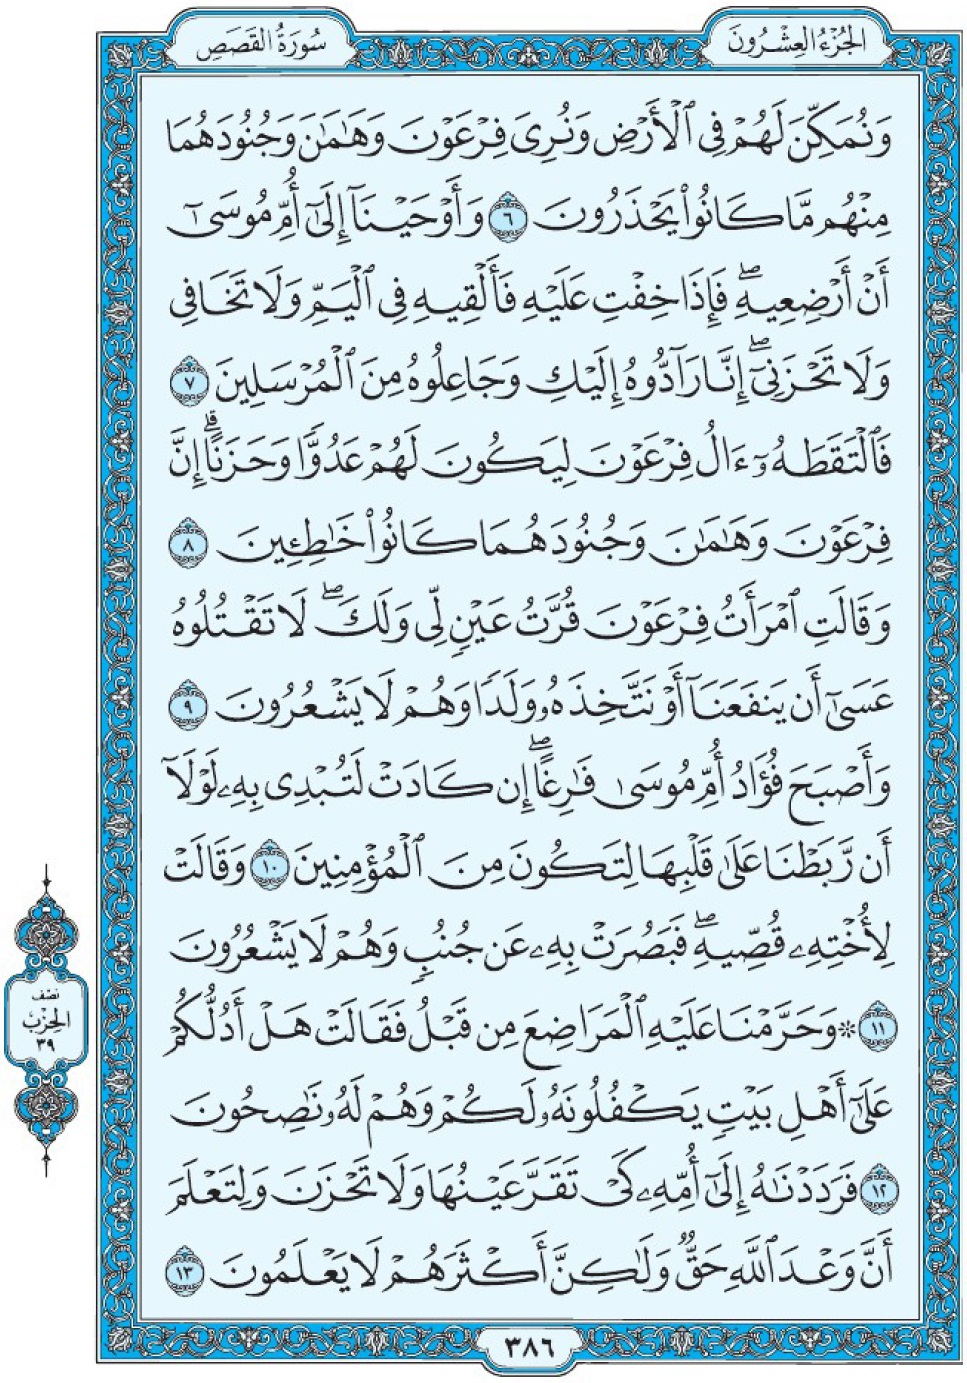 Коран Мединский мусхаф страница 386, Аль-Касас, аят 6-13